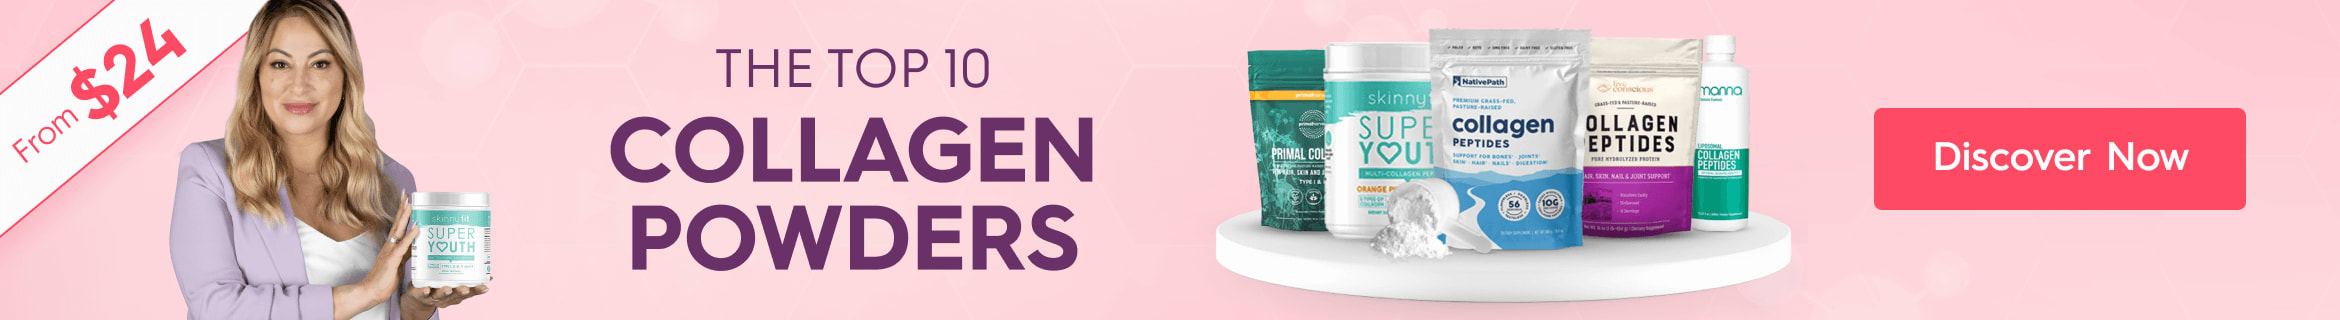 Top 10 Collagen Supplements Banner - Shop Now for the Best Collagen Supplements